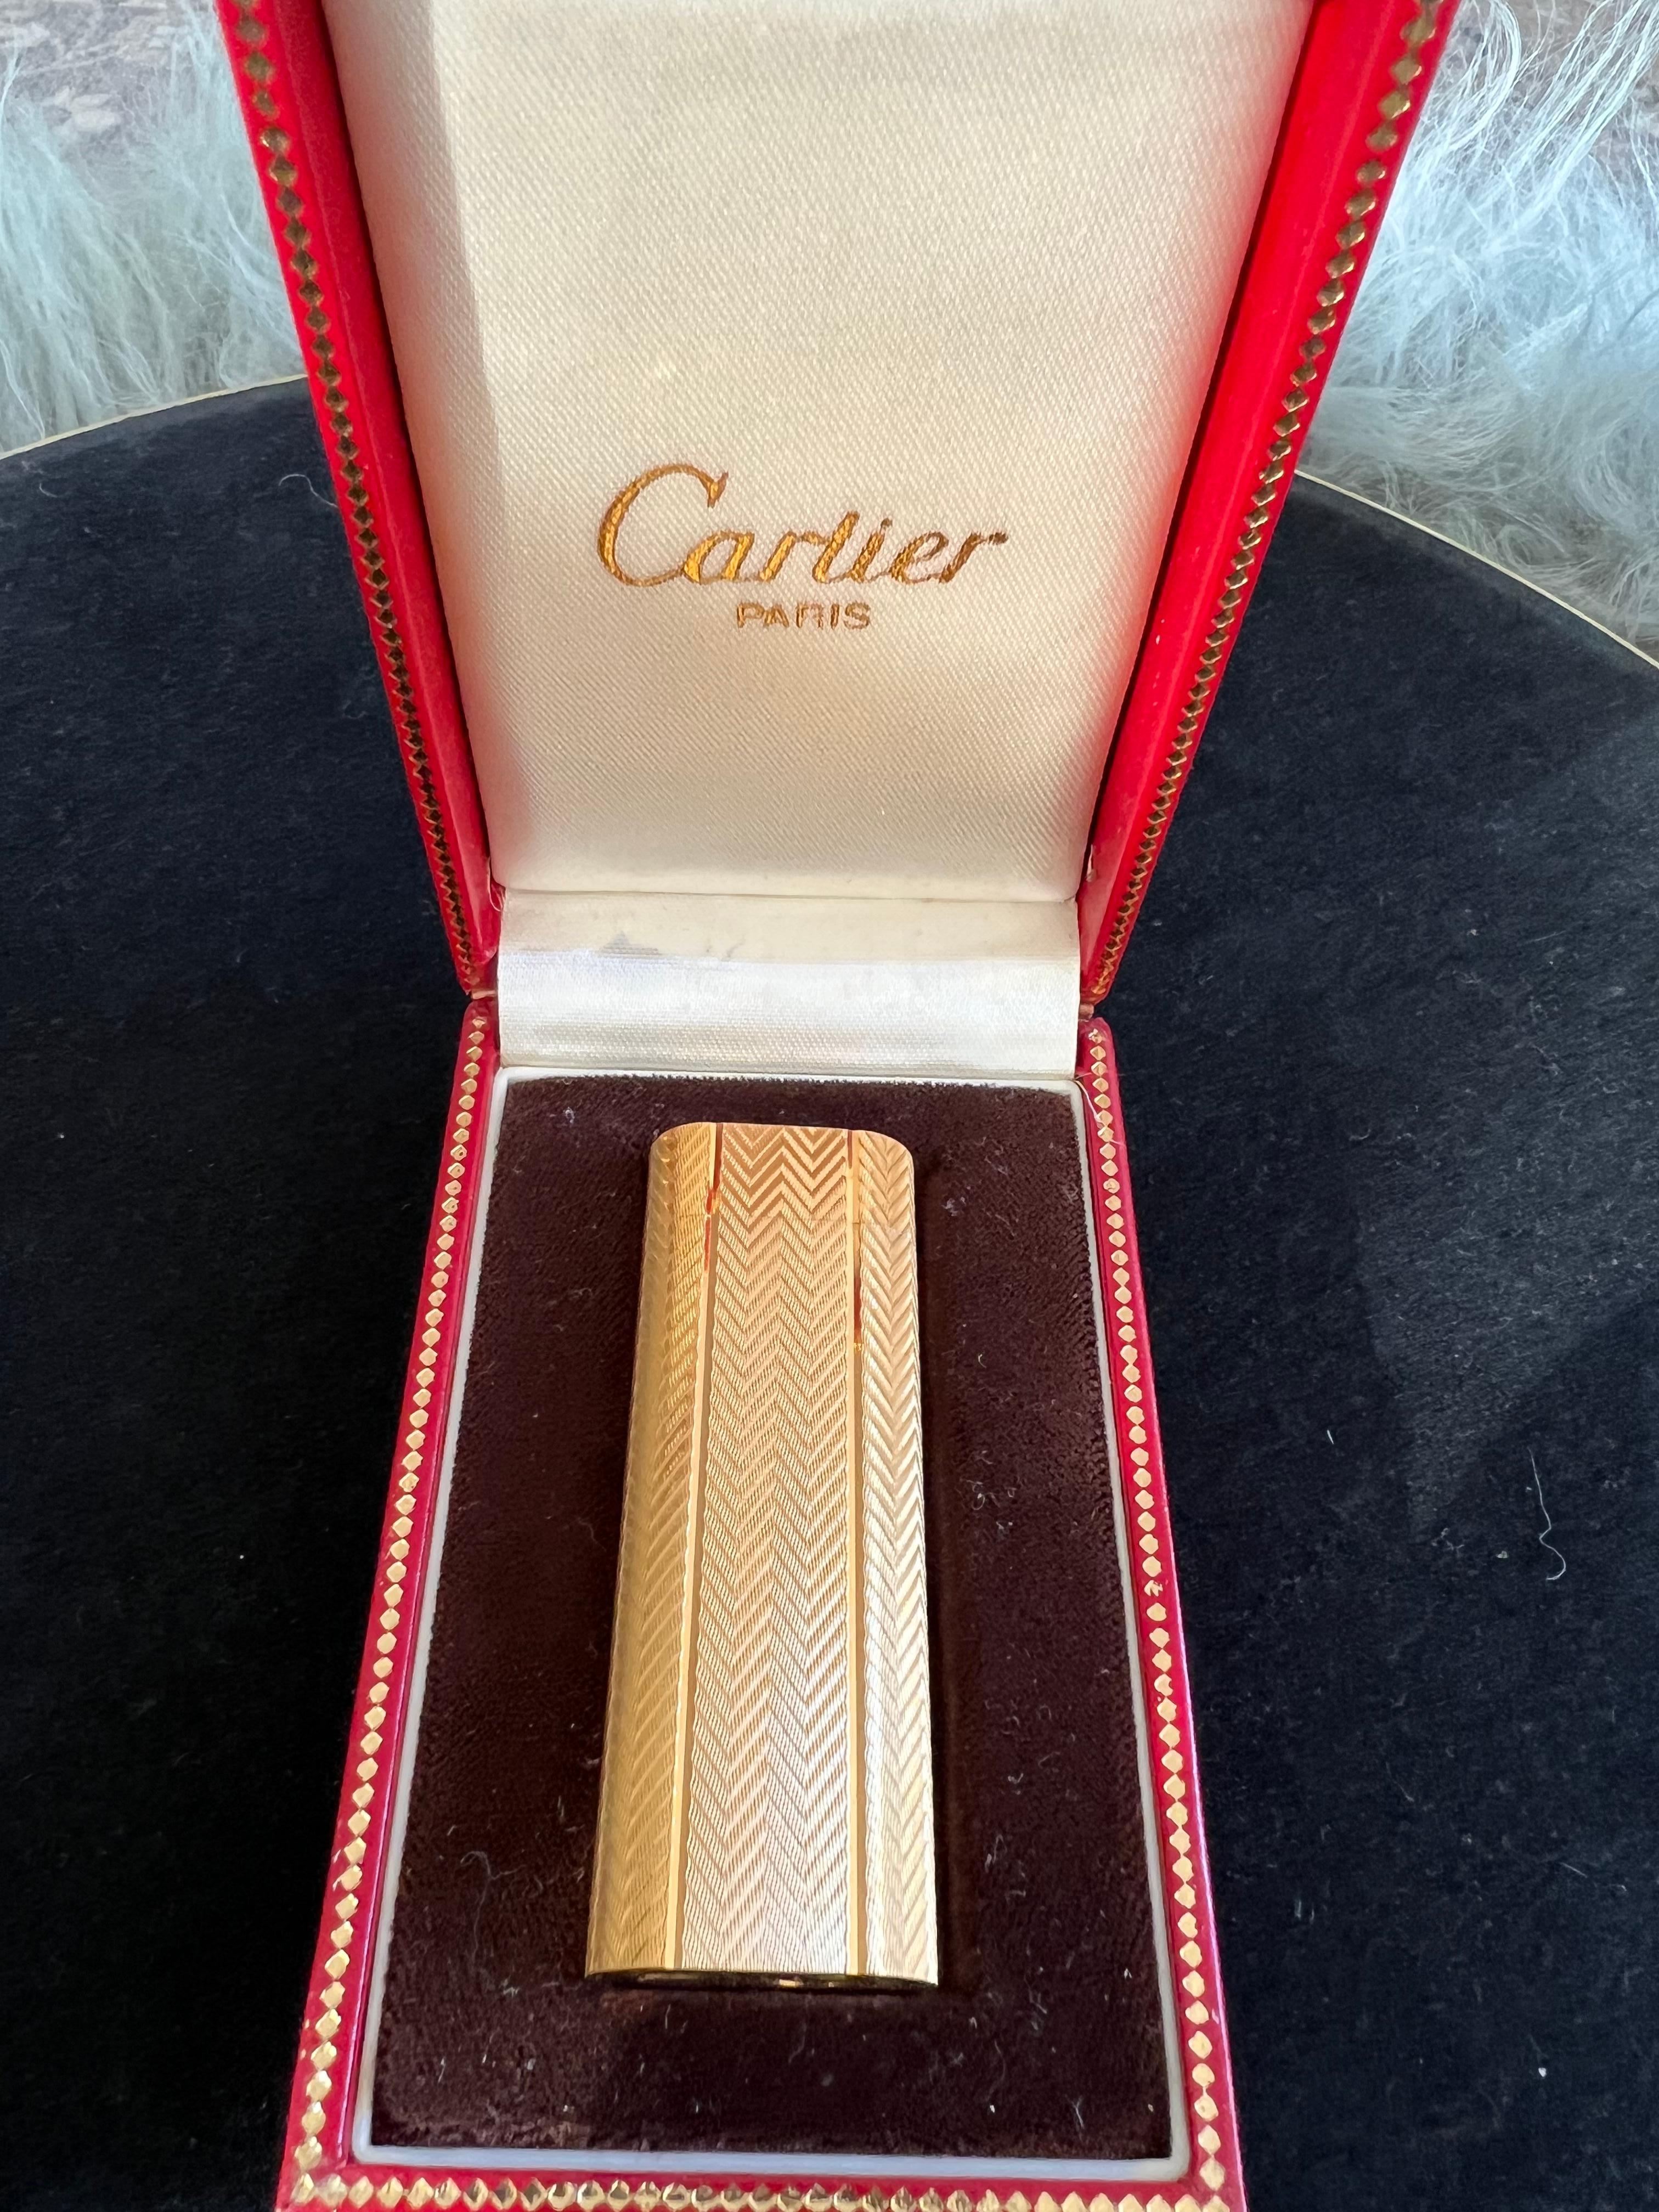 Les Must de Cartier Paris 18k Gold Plated Lighter 6